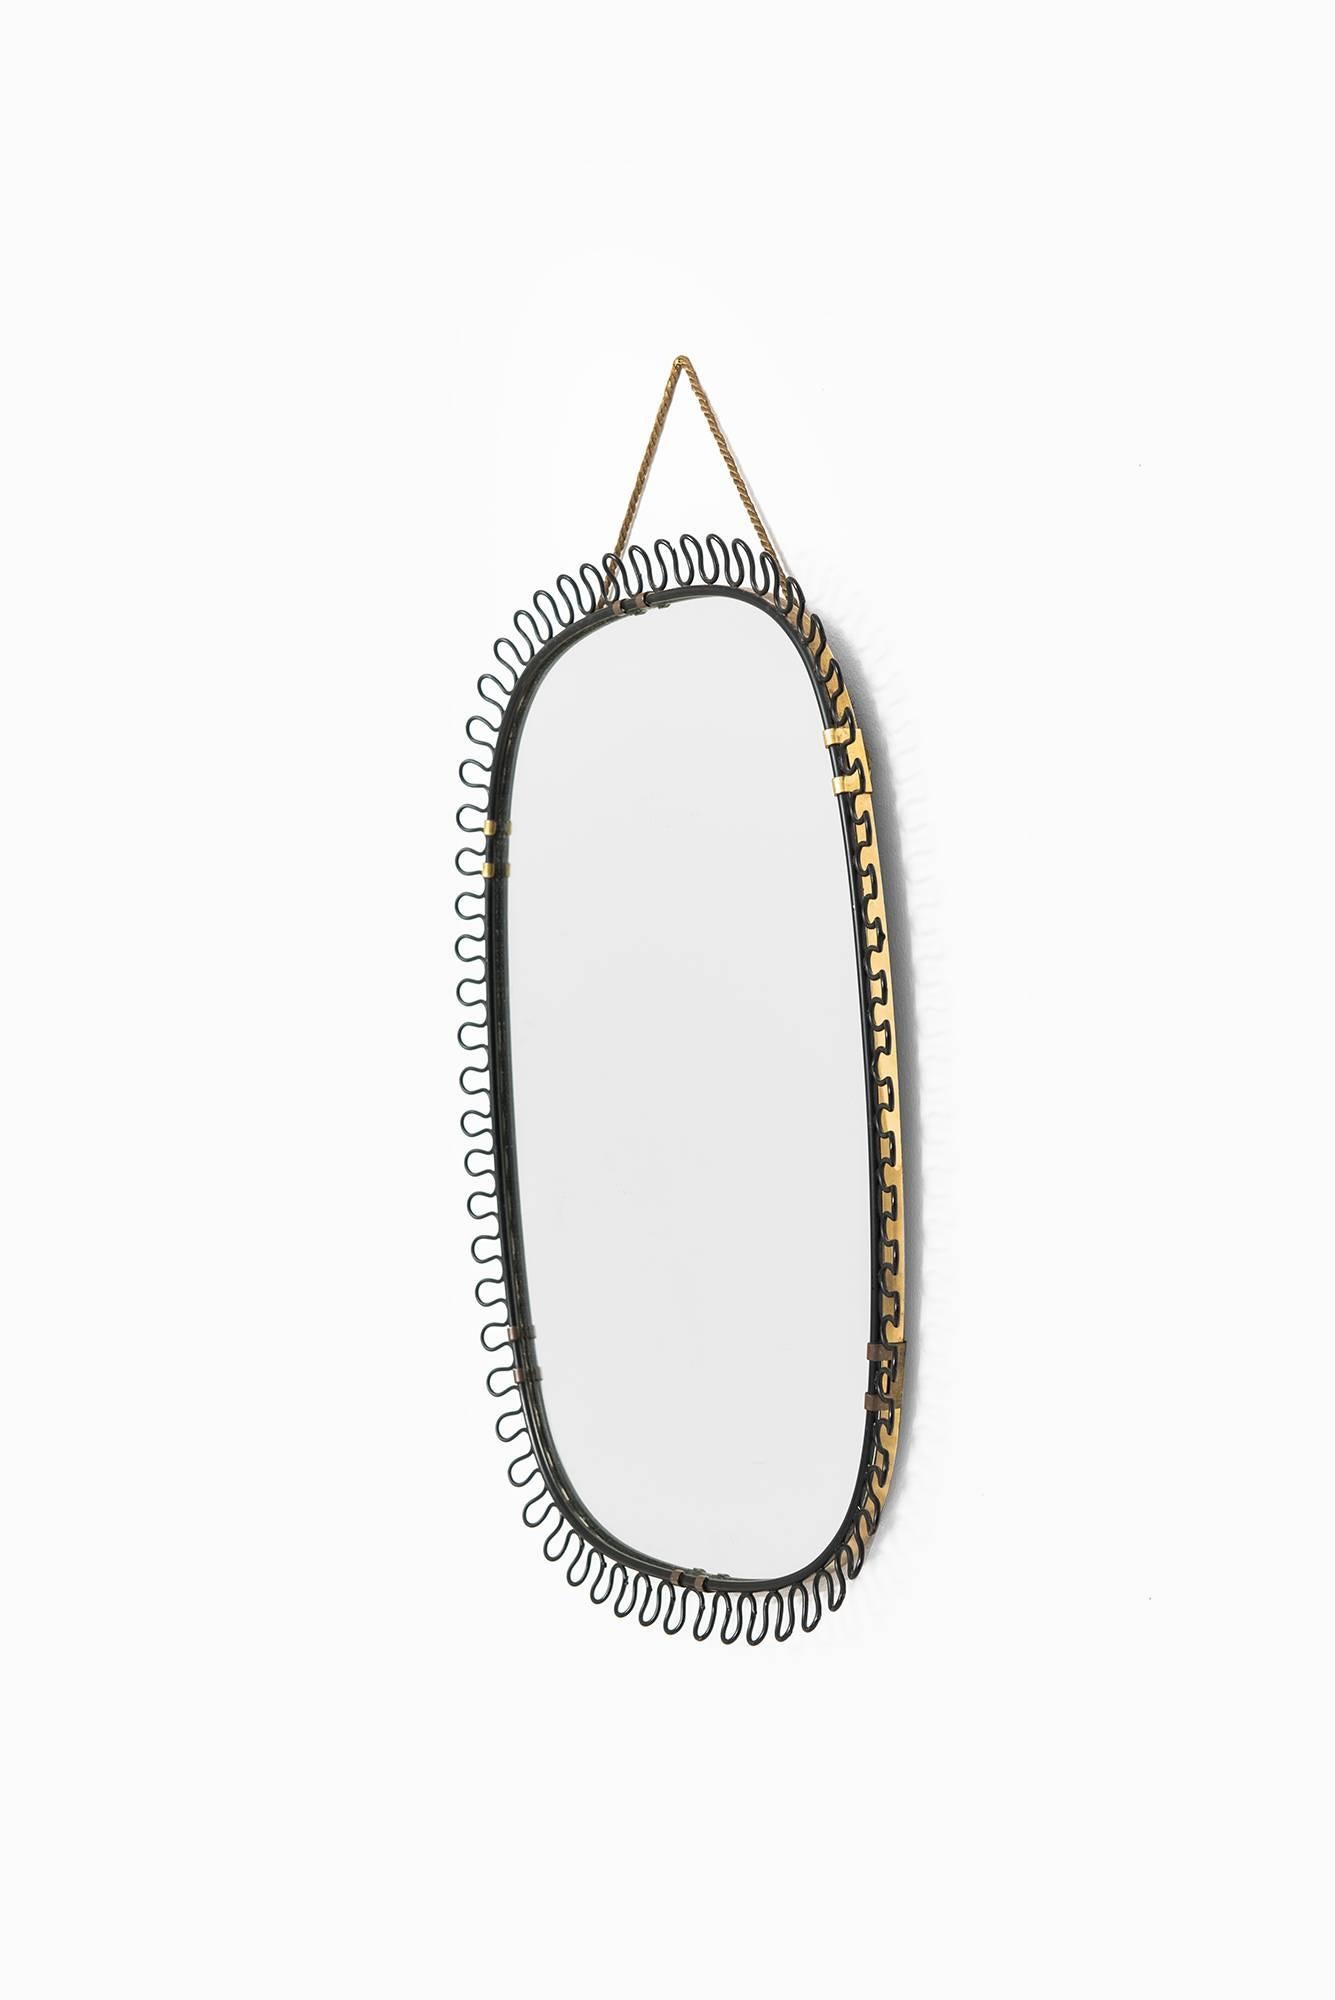 Swedish Mirror Designed by Josef Frank Produced by Svenskt Tenn in Sweden